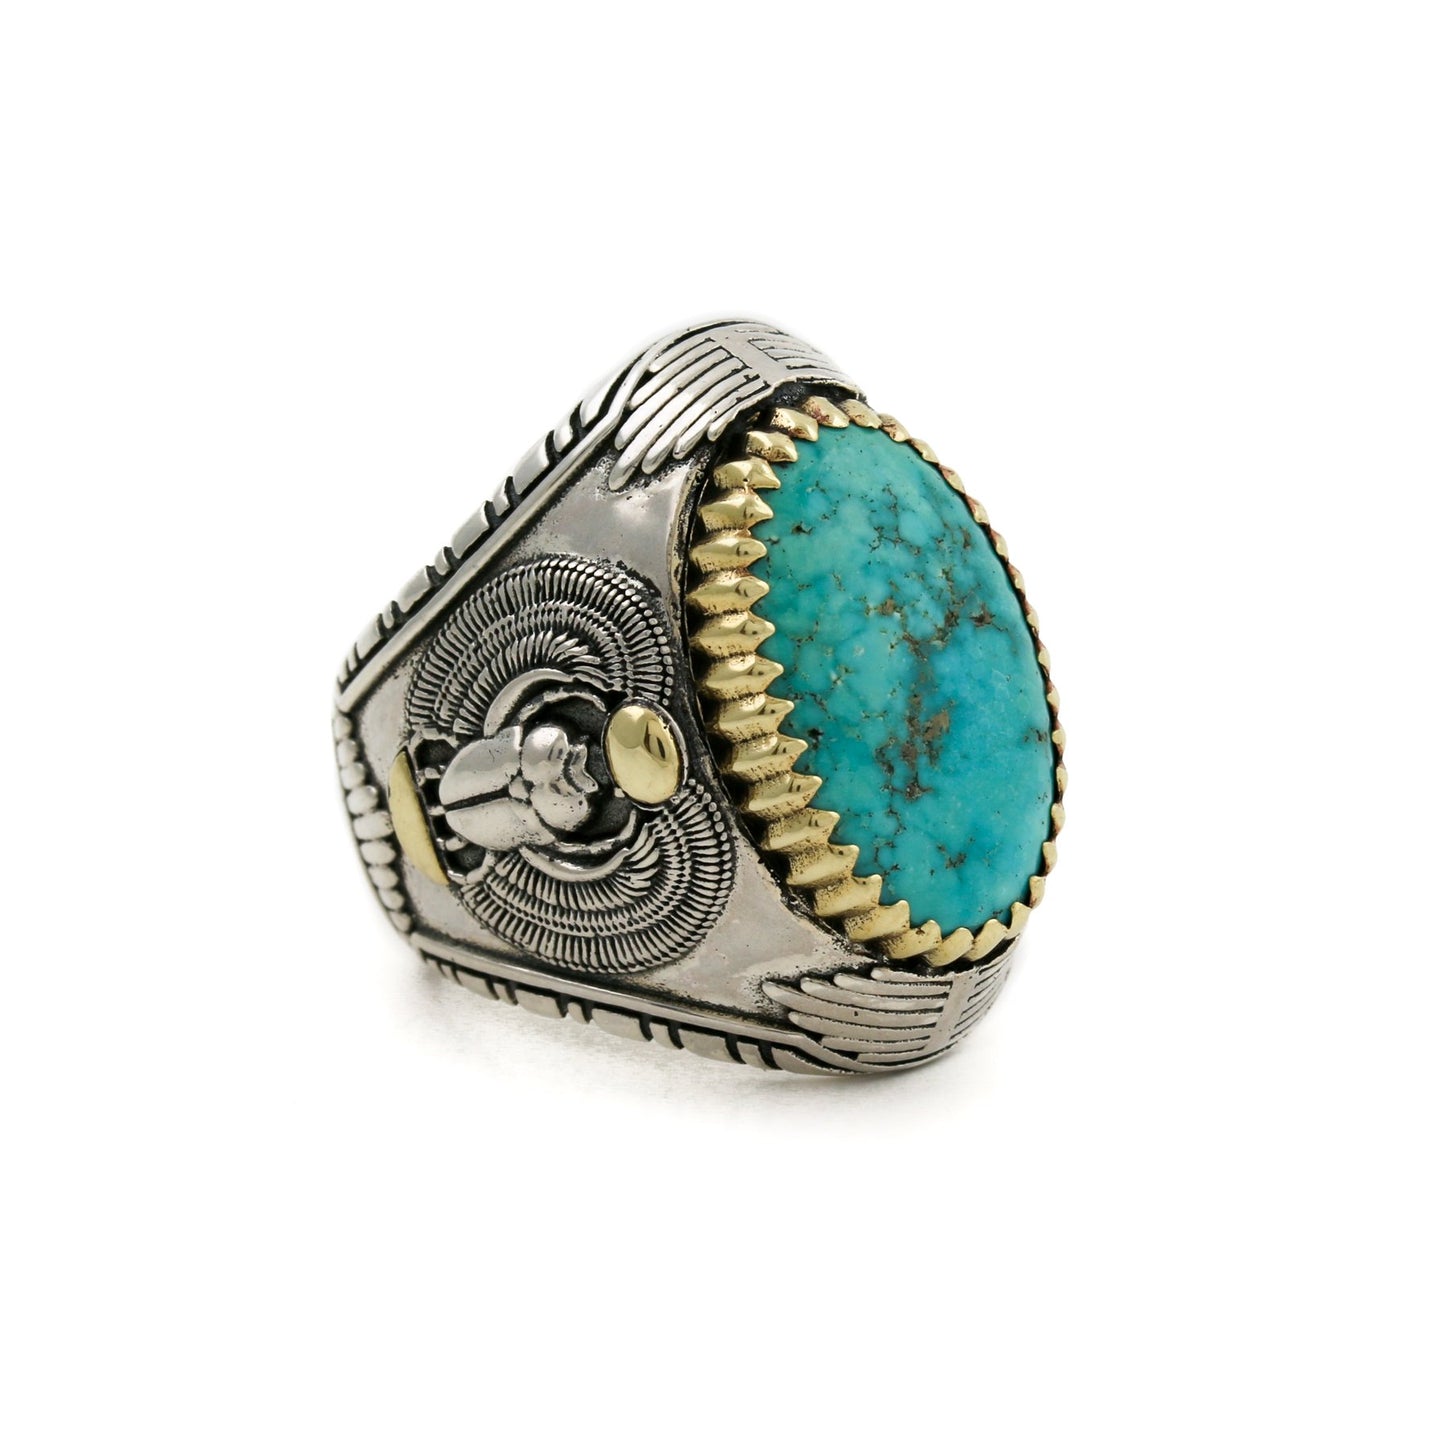 The "Ramses" Ring x Carico Lake Turquoise - Kingdom Jewelry